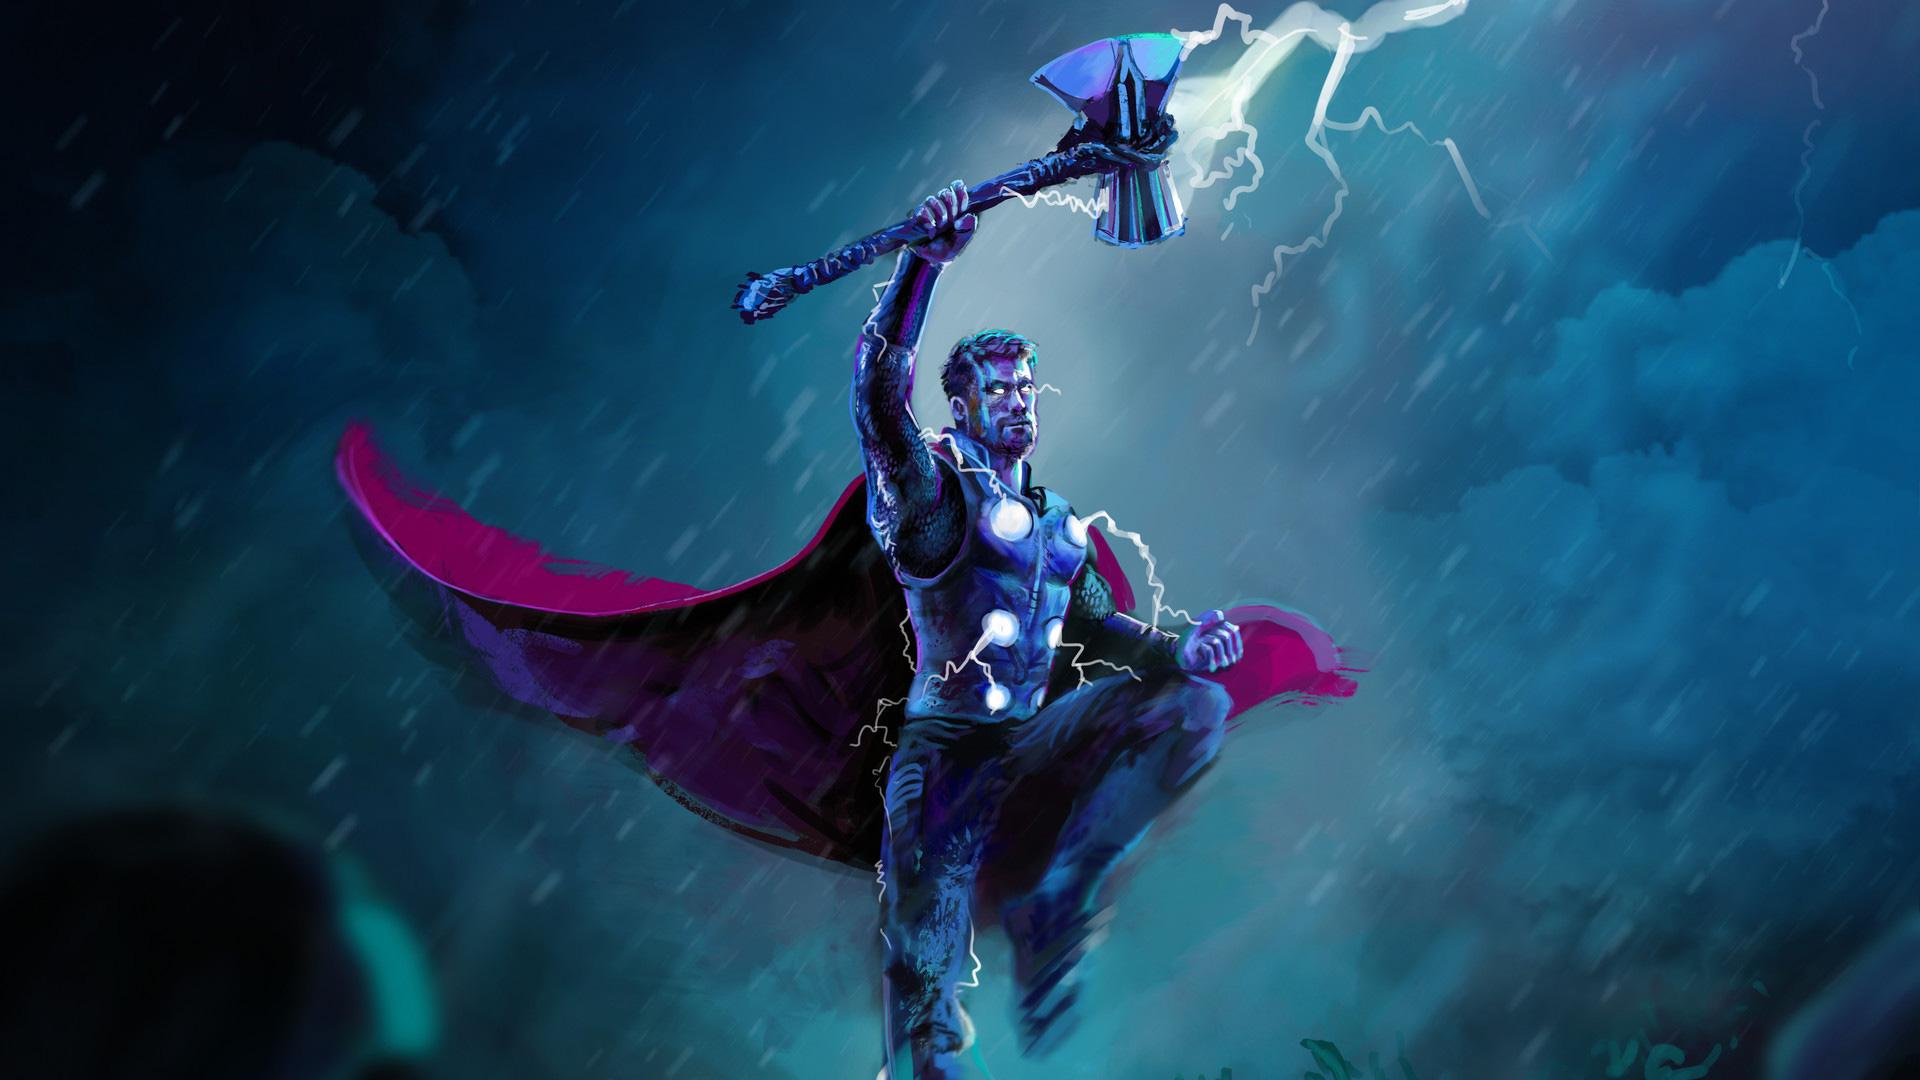 Thanos Vs Thor Avengers Wallpapers